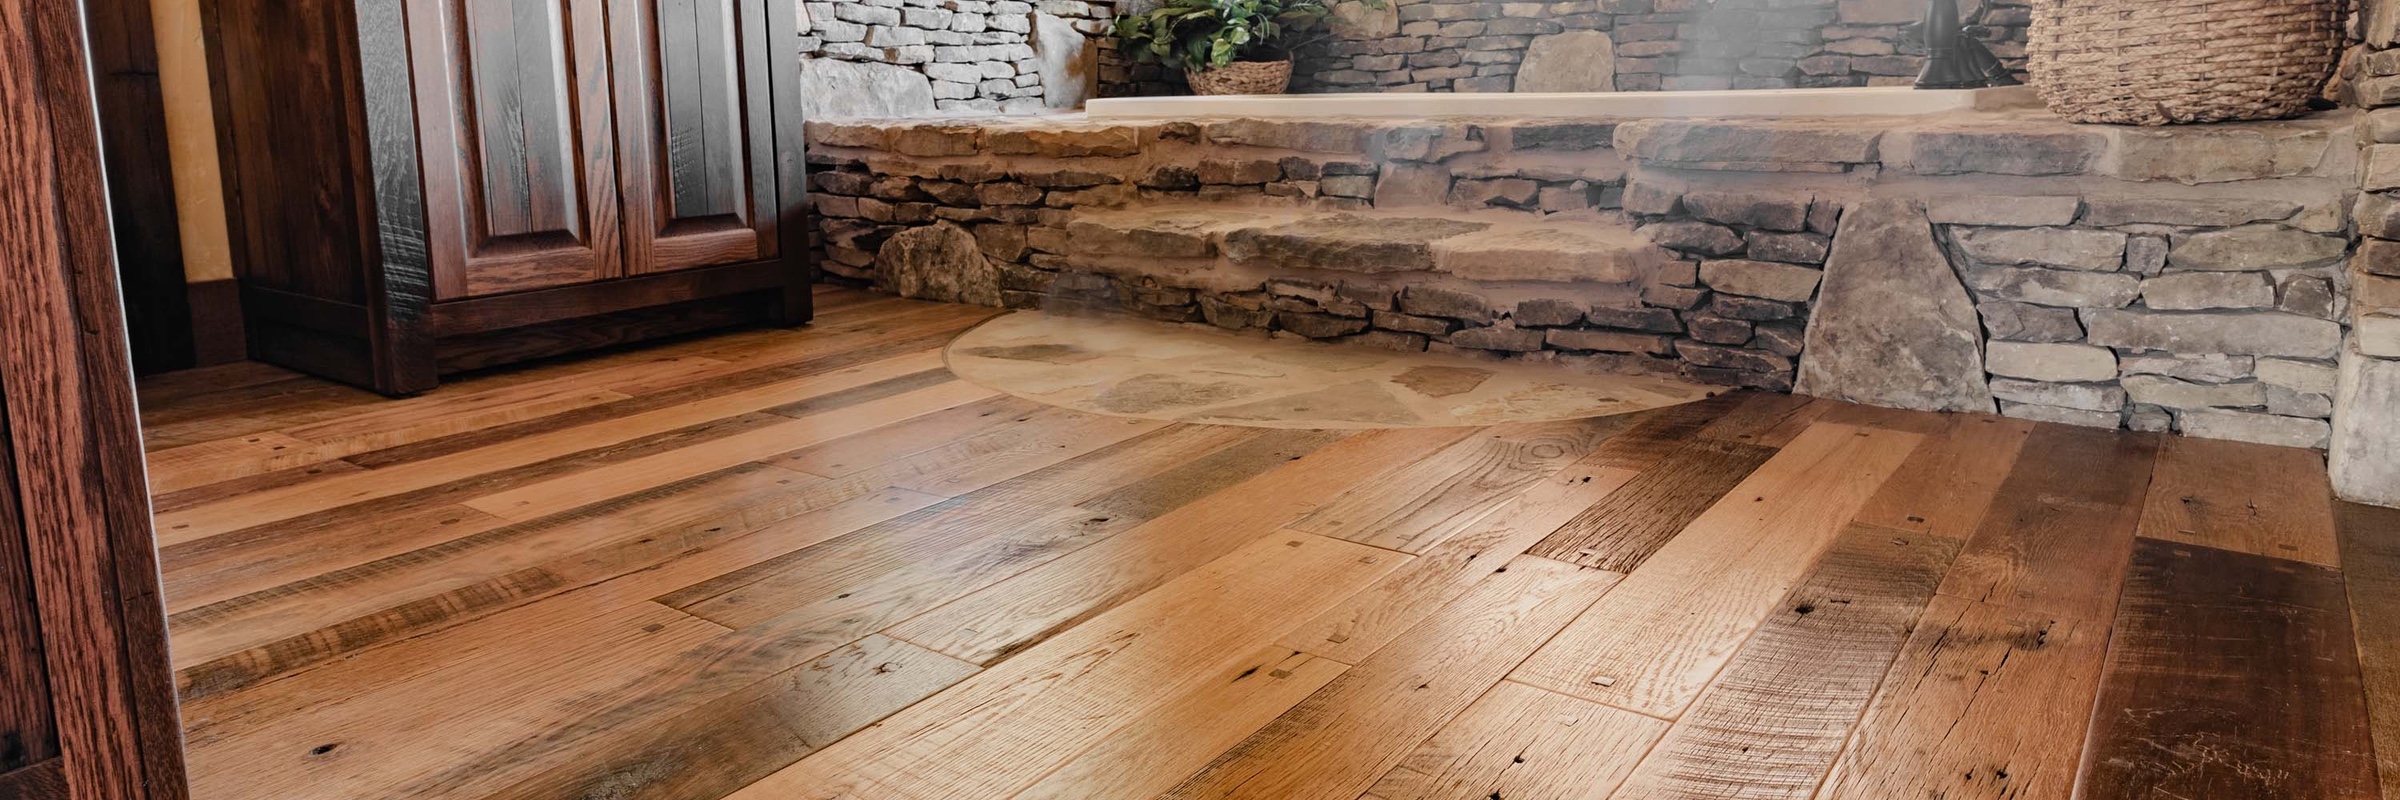 HOME PAGE – Hardwood flooring image